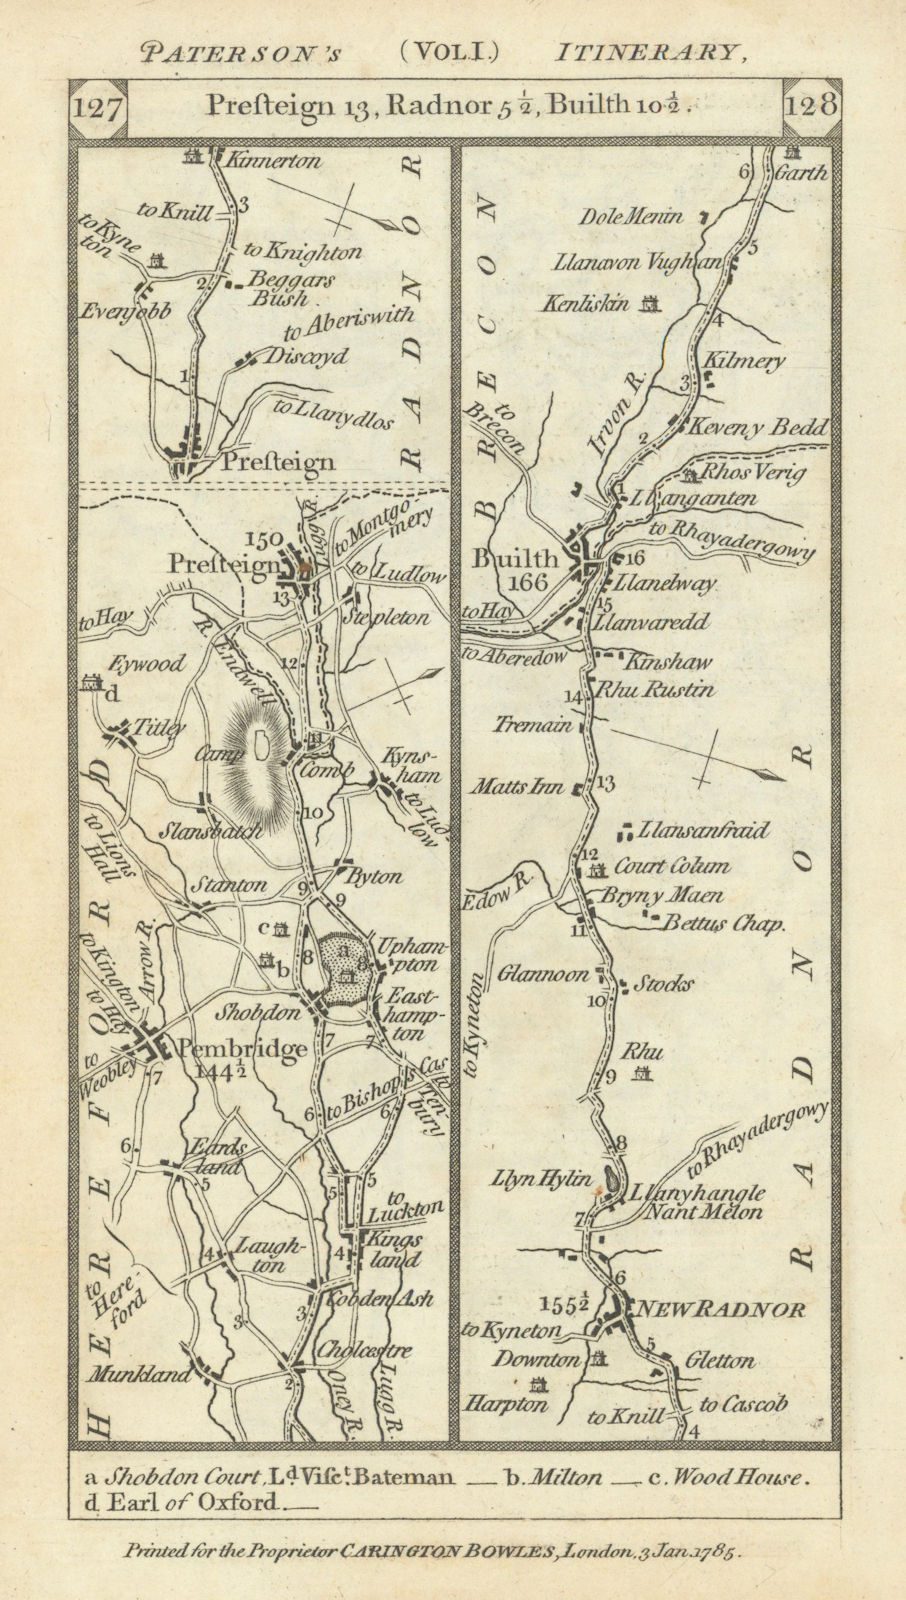 Pembridge-Presteigne-New Radnor-Builth Wells road strip map PATERSON 1785